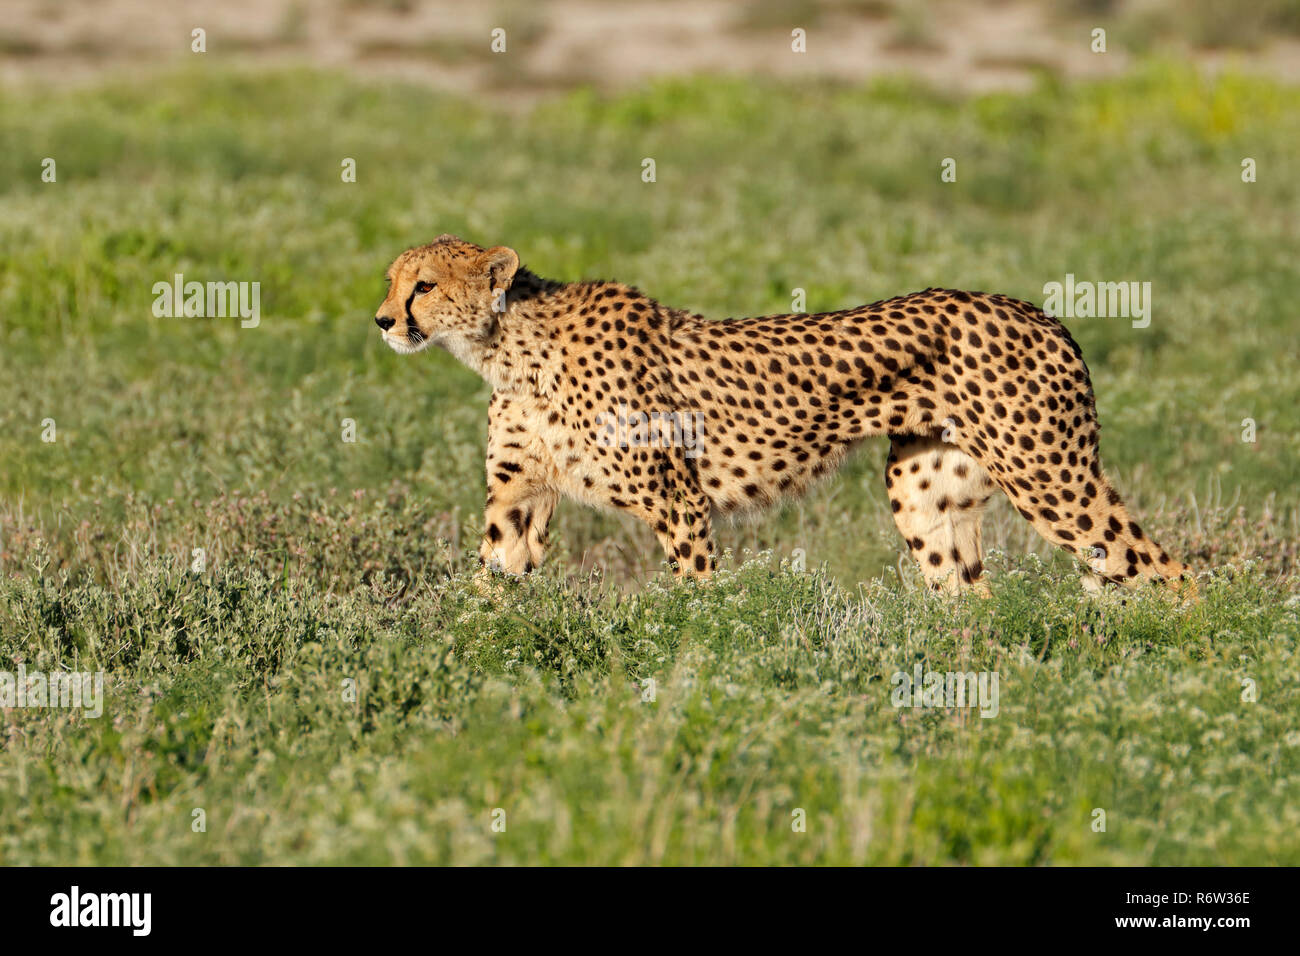 Alert cheetah on the hunt Stock Photo